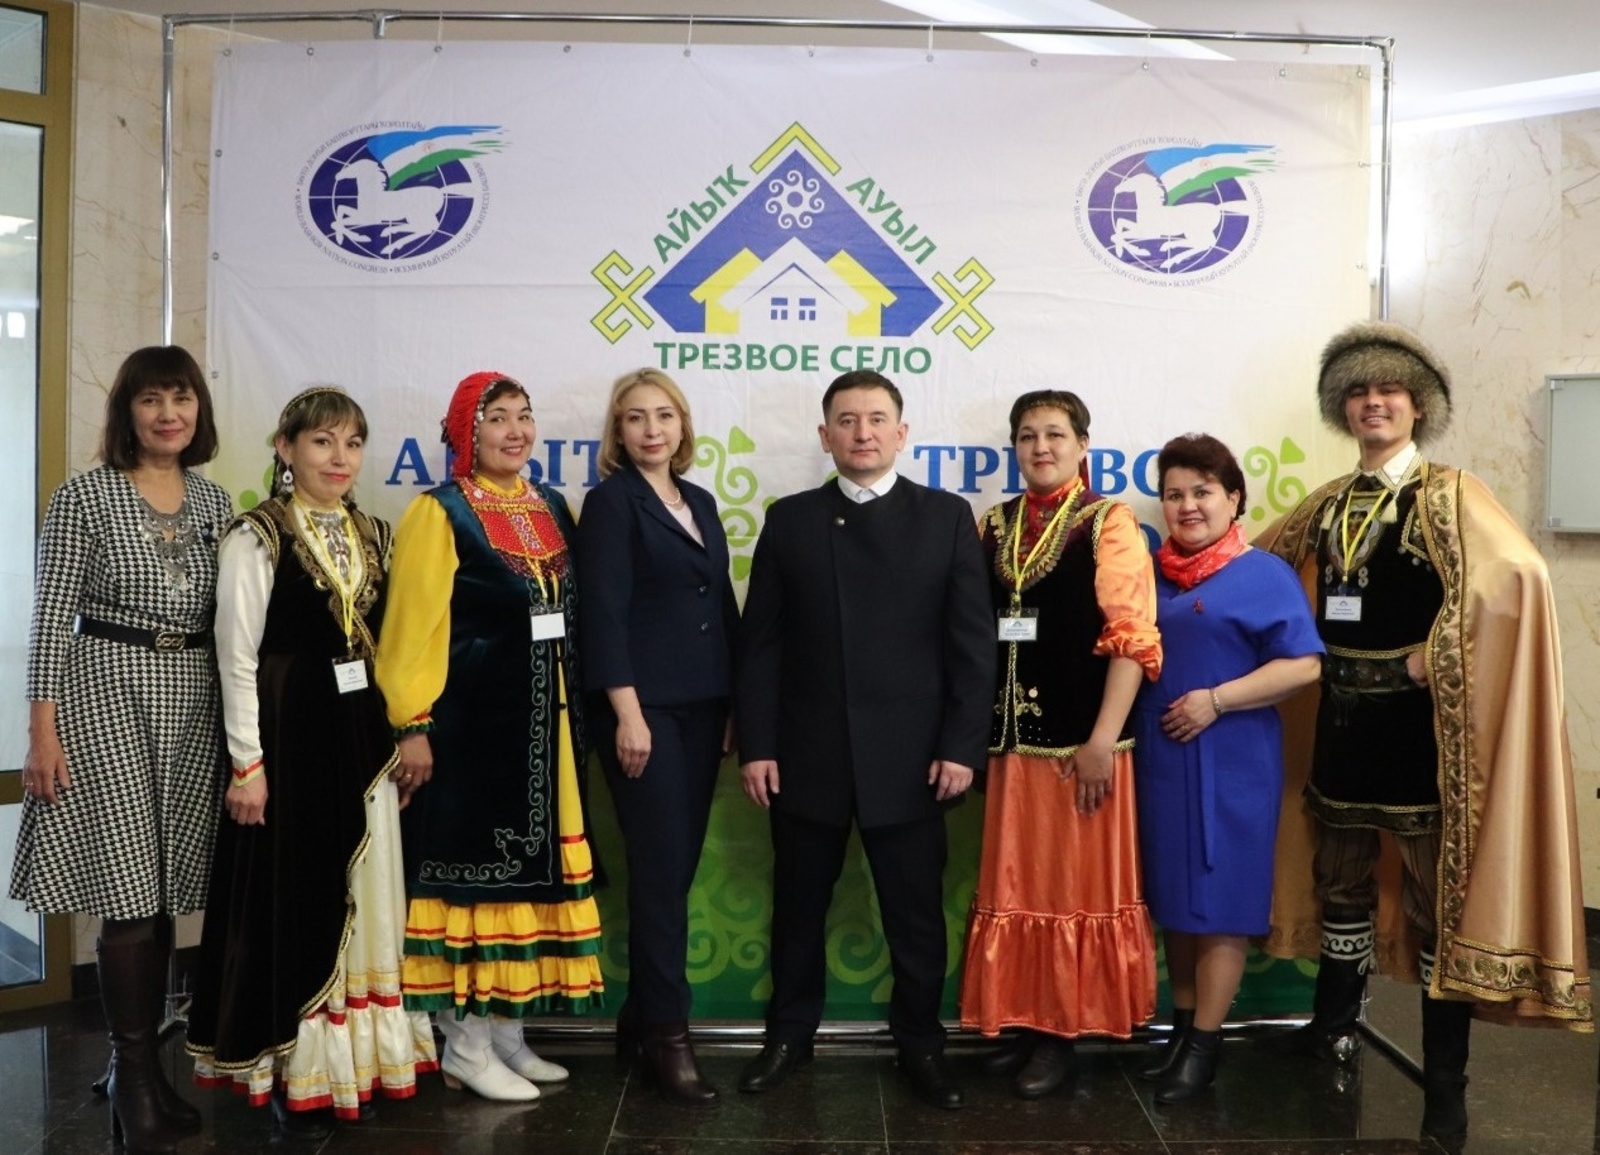 Команда Аургазинского района Башкирии достойно показала себя в конкурсе "Трезвое село 2022"